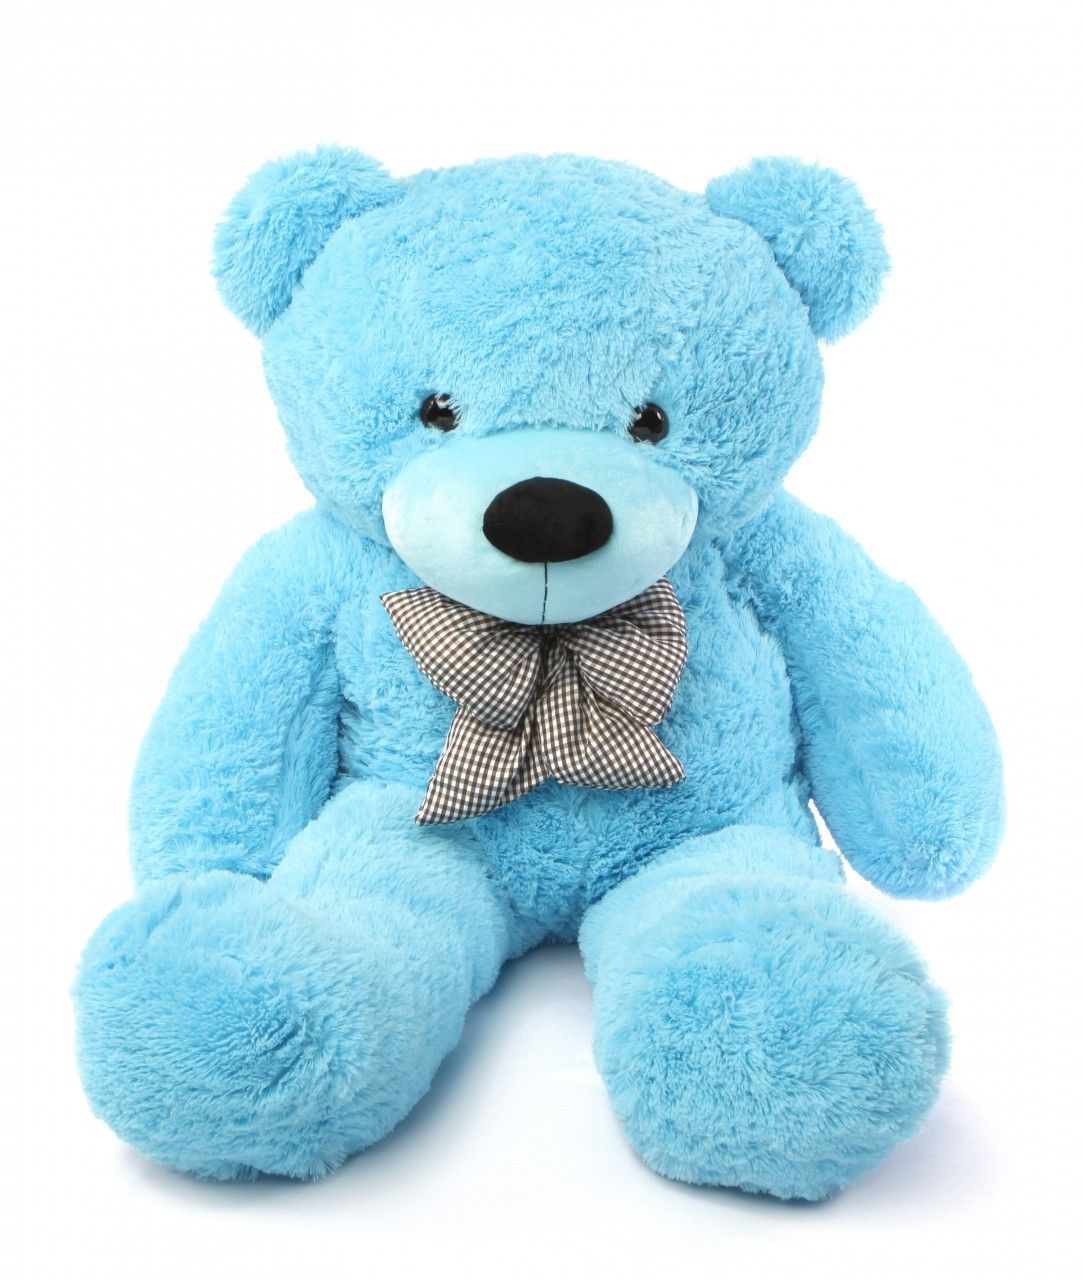 Blue Teddy Bear by Asparuxx on DeviantArt